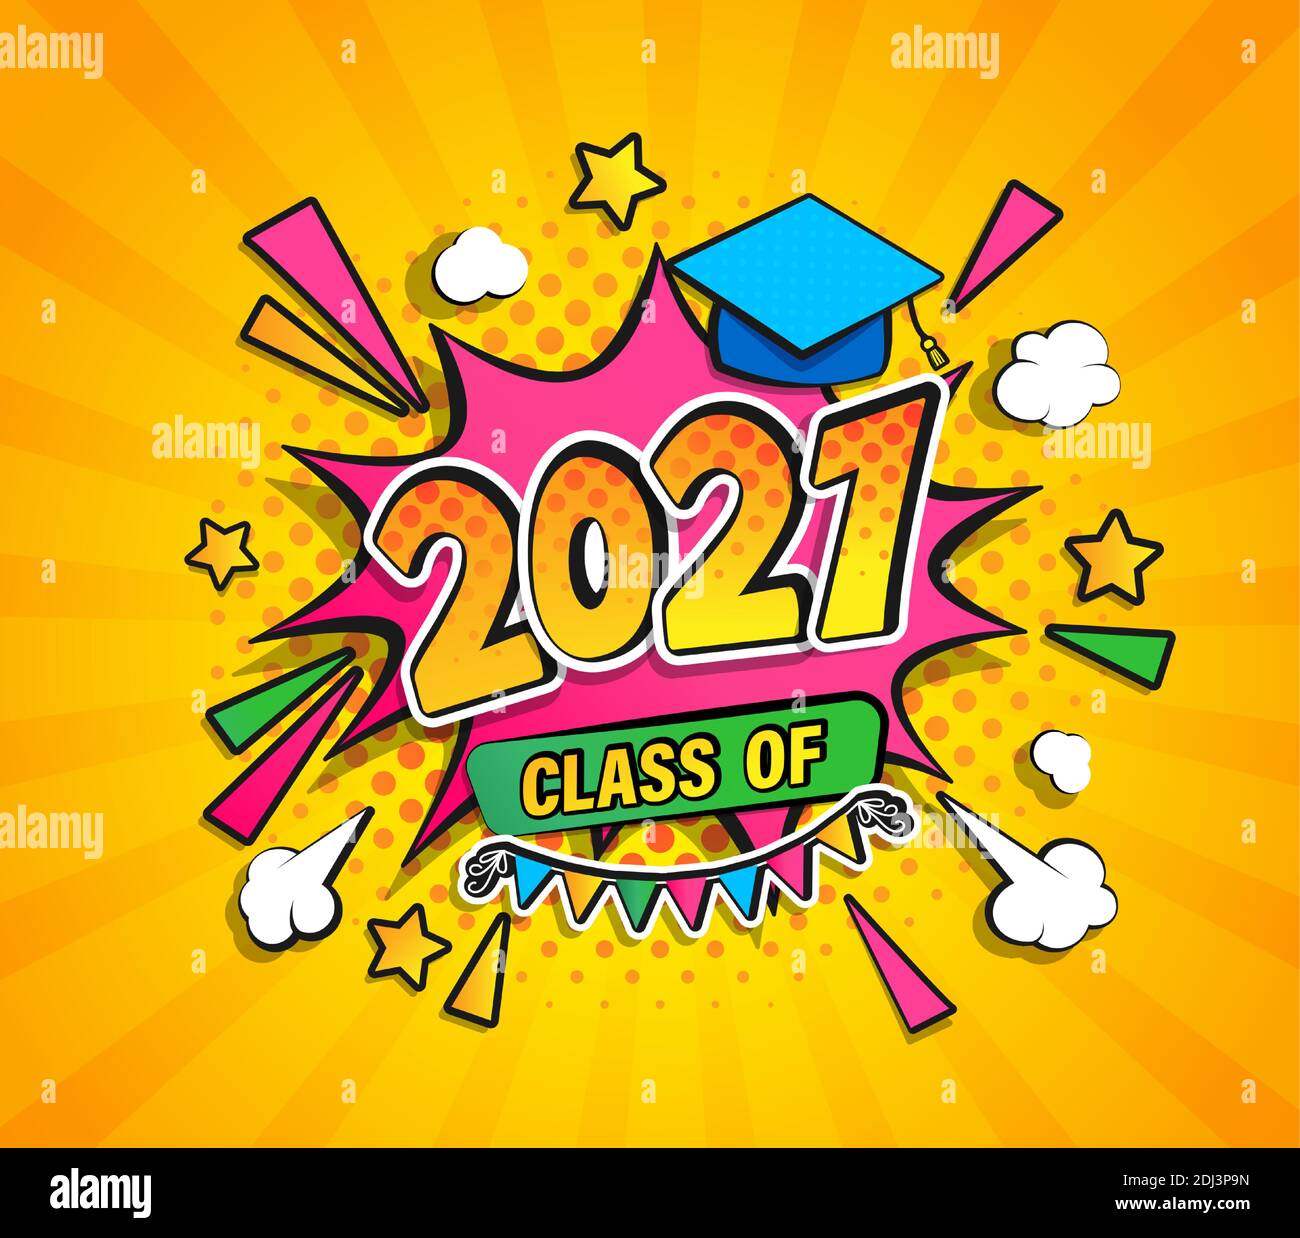 Class of 2021, graduation banner Stock Vector Image & Art - Alamy